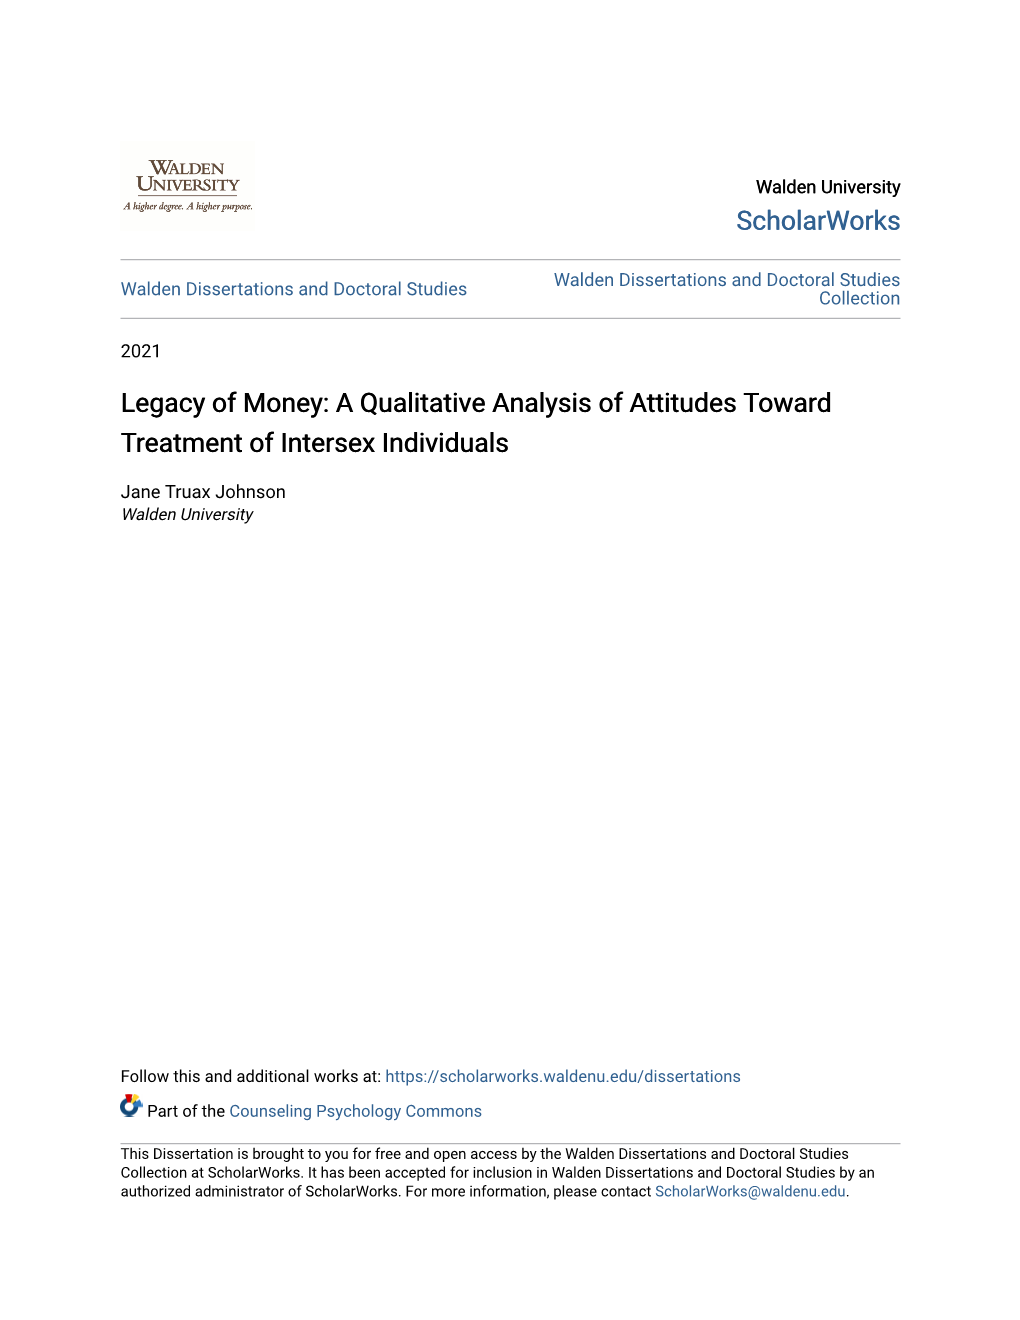 A Qualitative Analysis of Attitudes Toward Treatment of Intersex Individuals